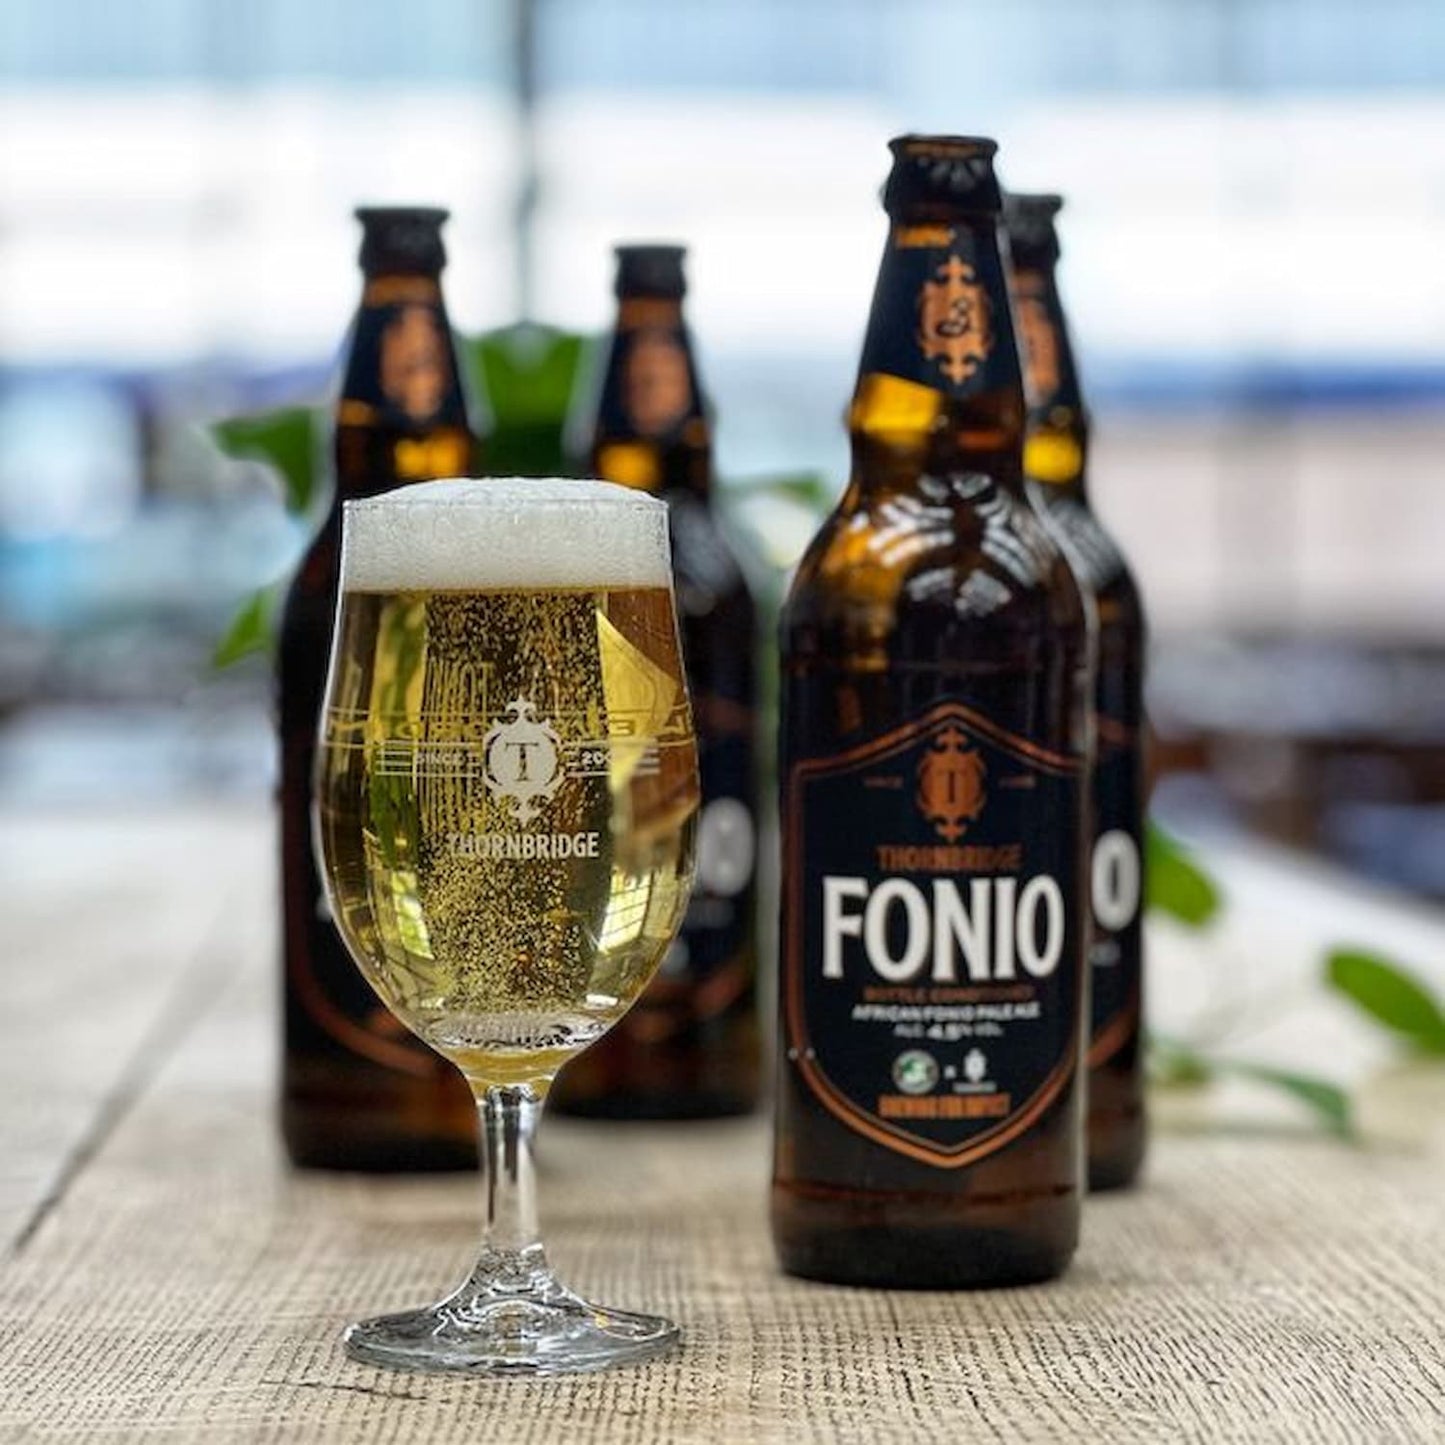 Fonio, 4.5% African Fonio Pale Ale 8 x 500ml bottles Beer - Case Bottle Thornbridge